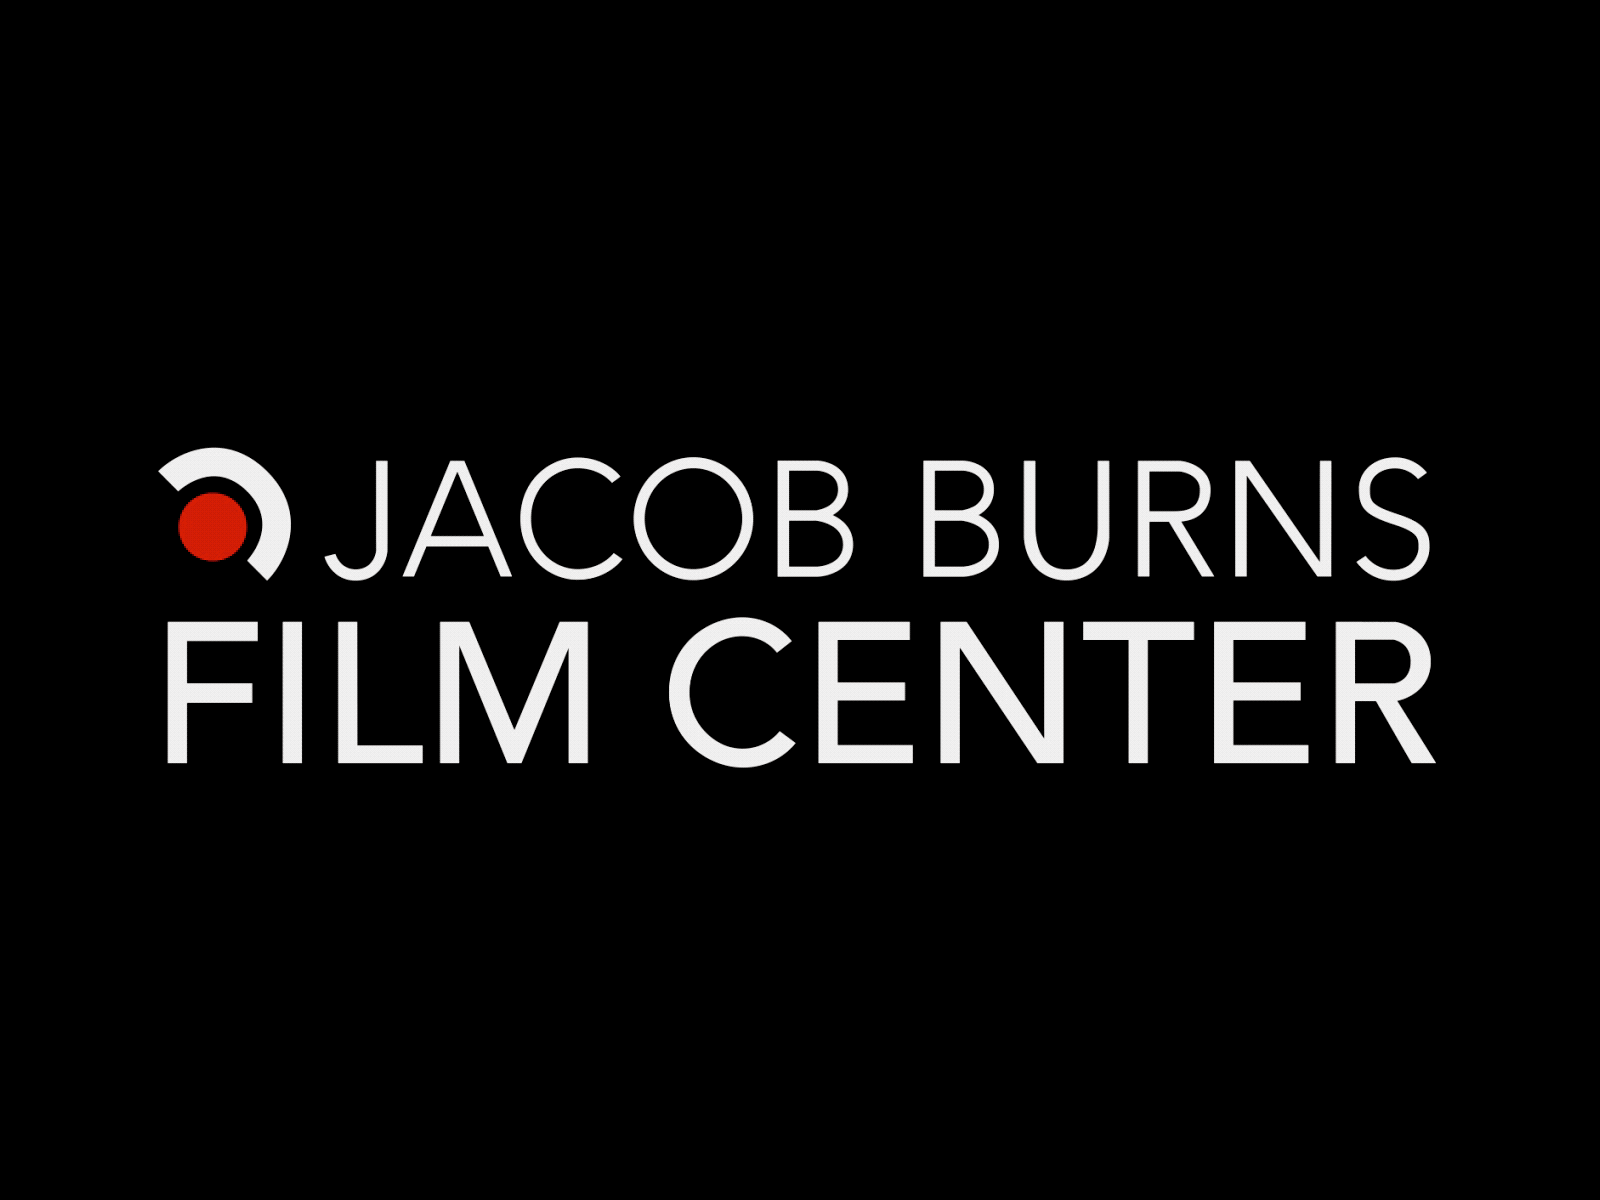 Jacob Burns Film Center 2018 after effects cinema films free time fridaynights friends jacobburnsfilmcenter jbfc logo me time memories motion movies popcorn work hard play harder